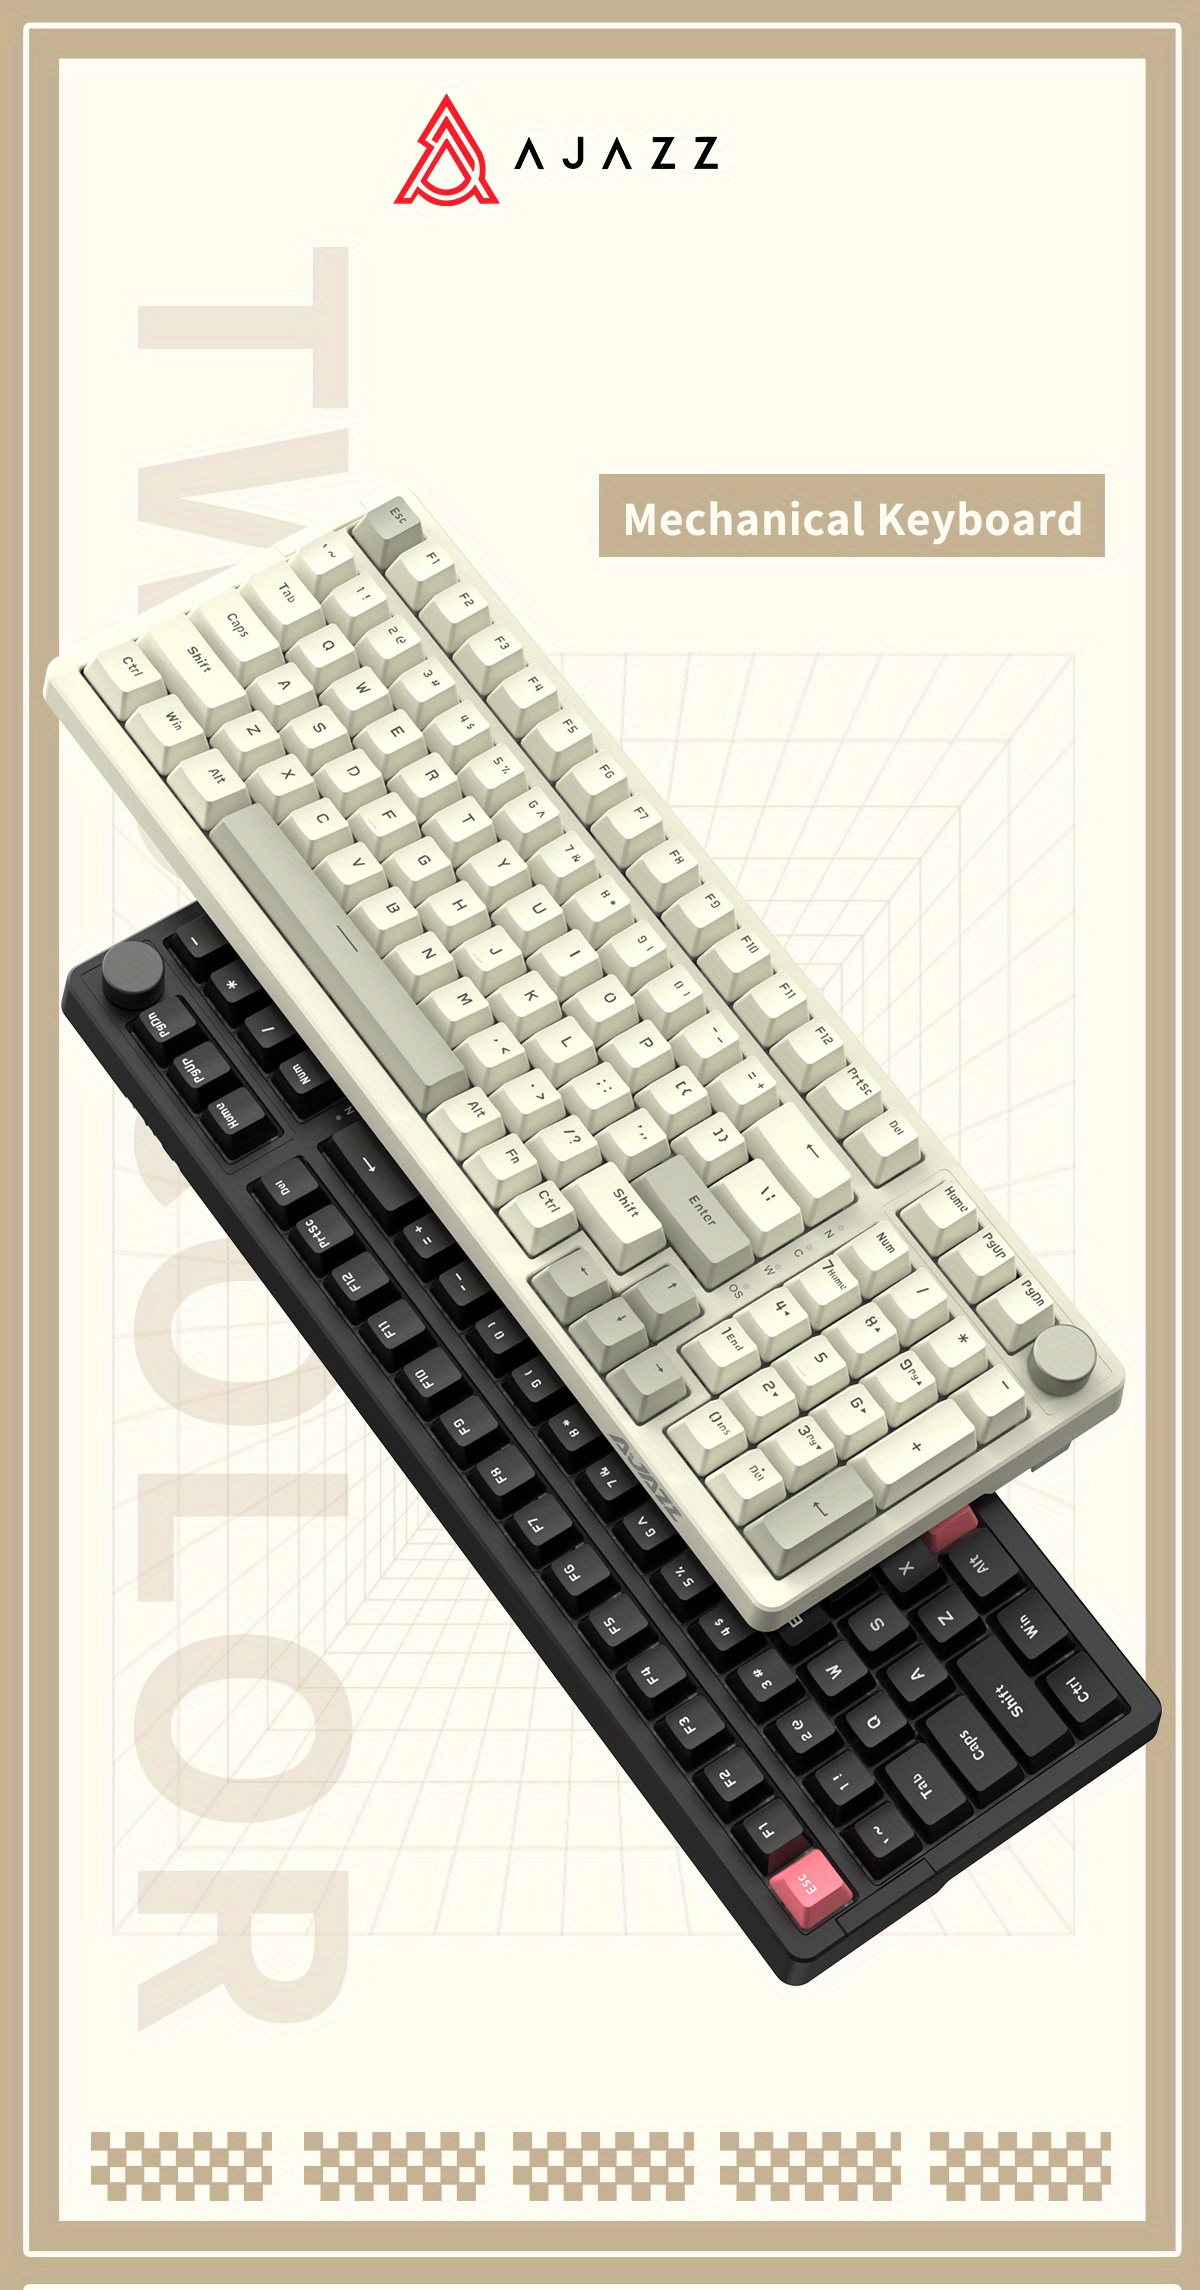 The lighting effect design of the AJAZZ AK820 Pro mechanical keyboard , keyboard